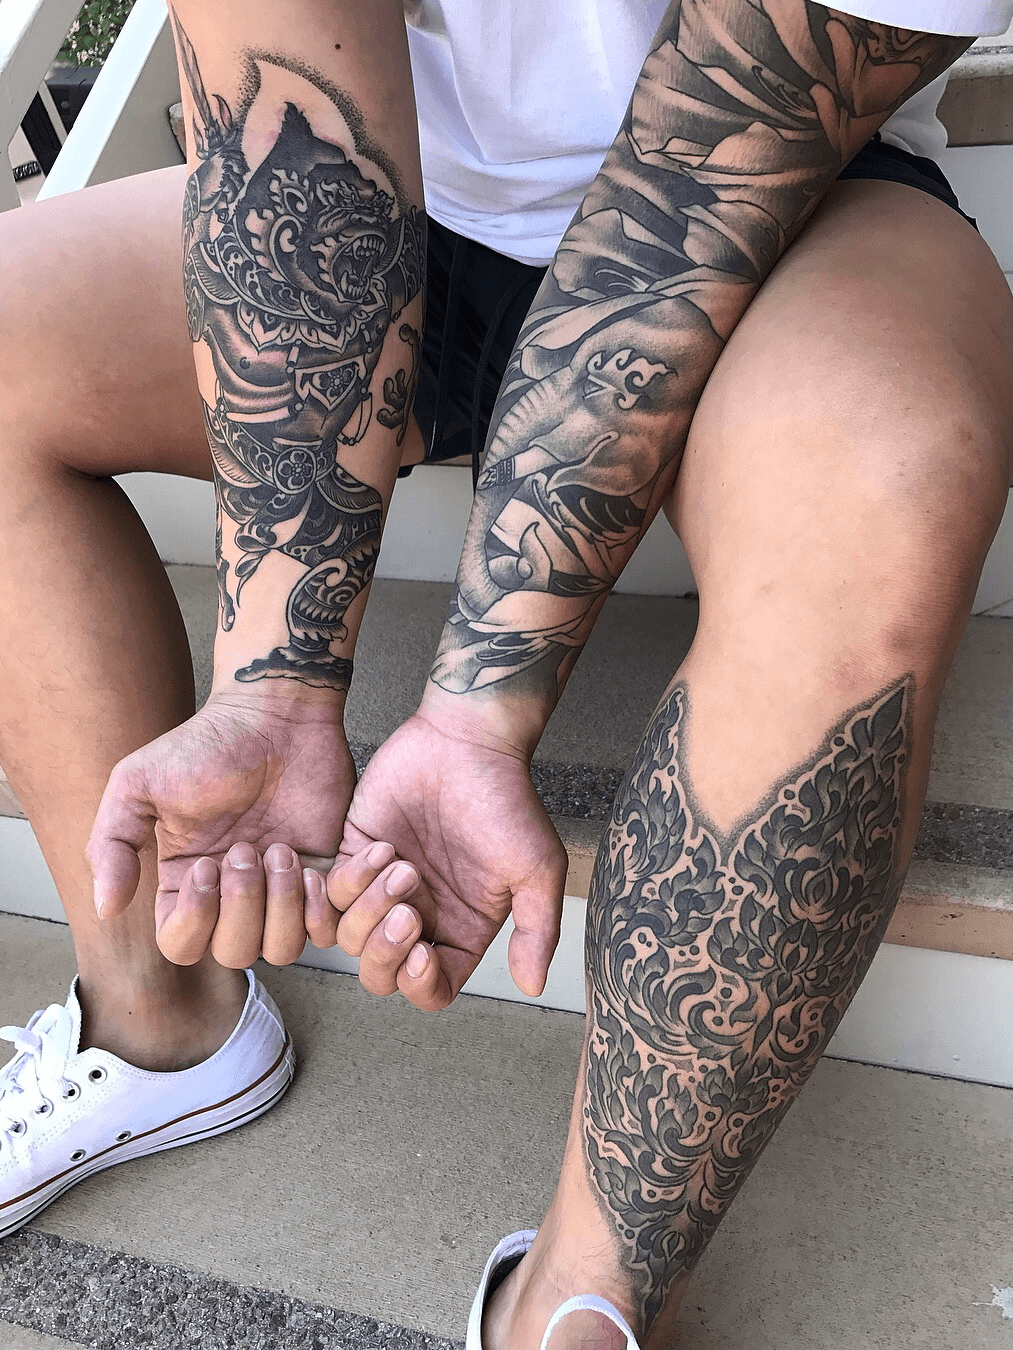 Some tattoo designs are classics